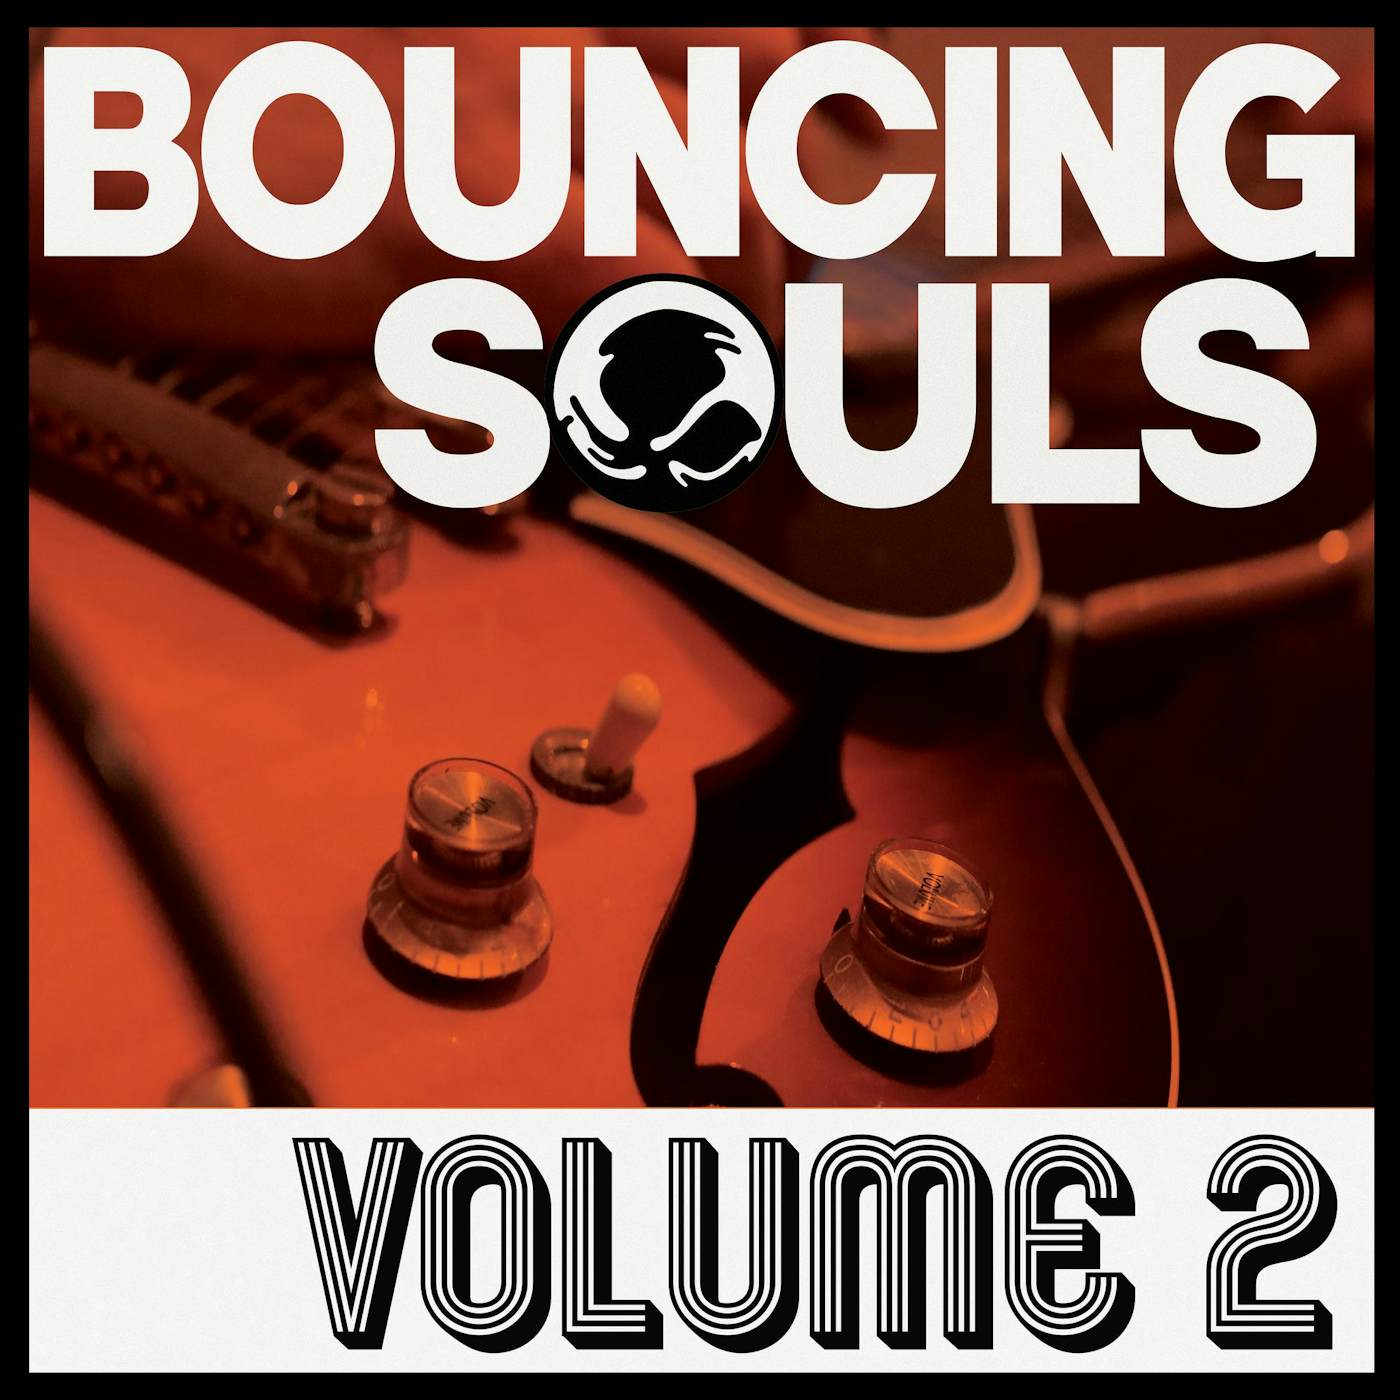 The Bouncing Souls VOLUME 2 CD